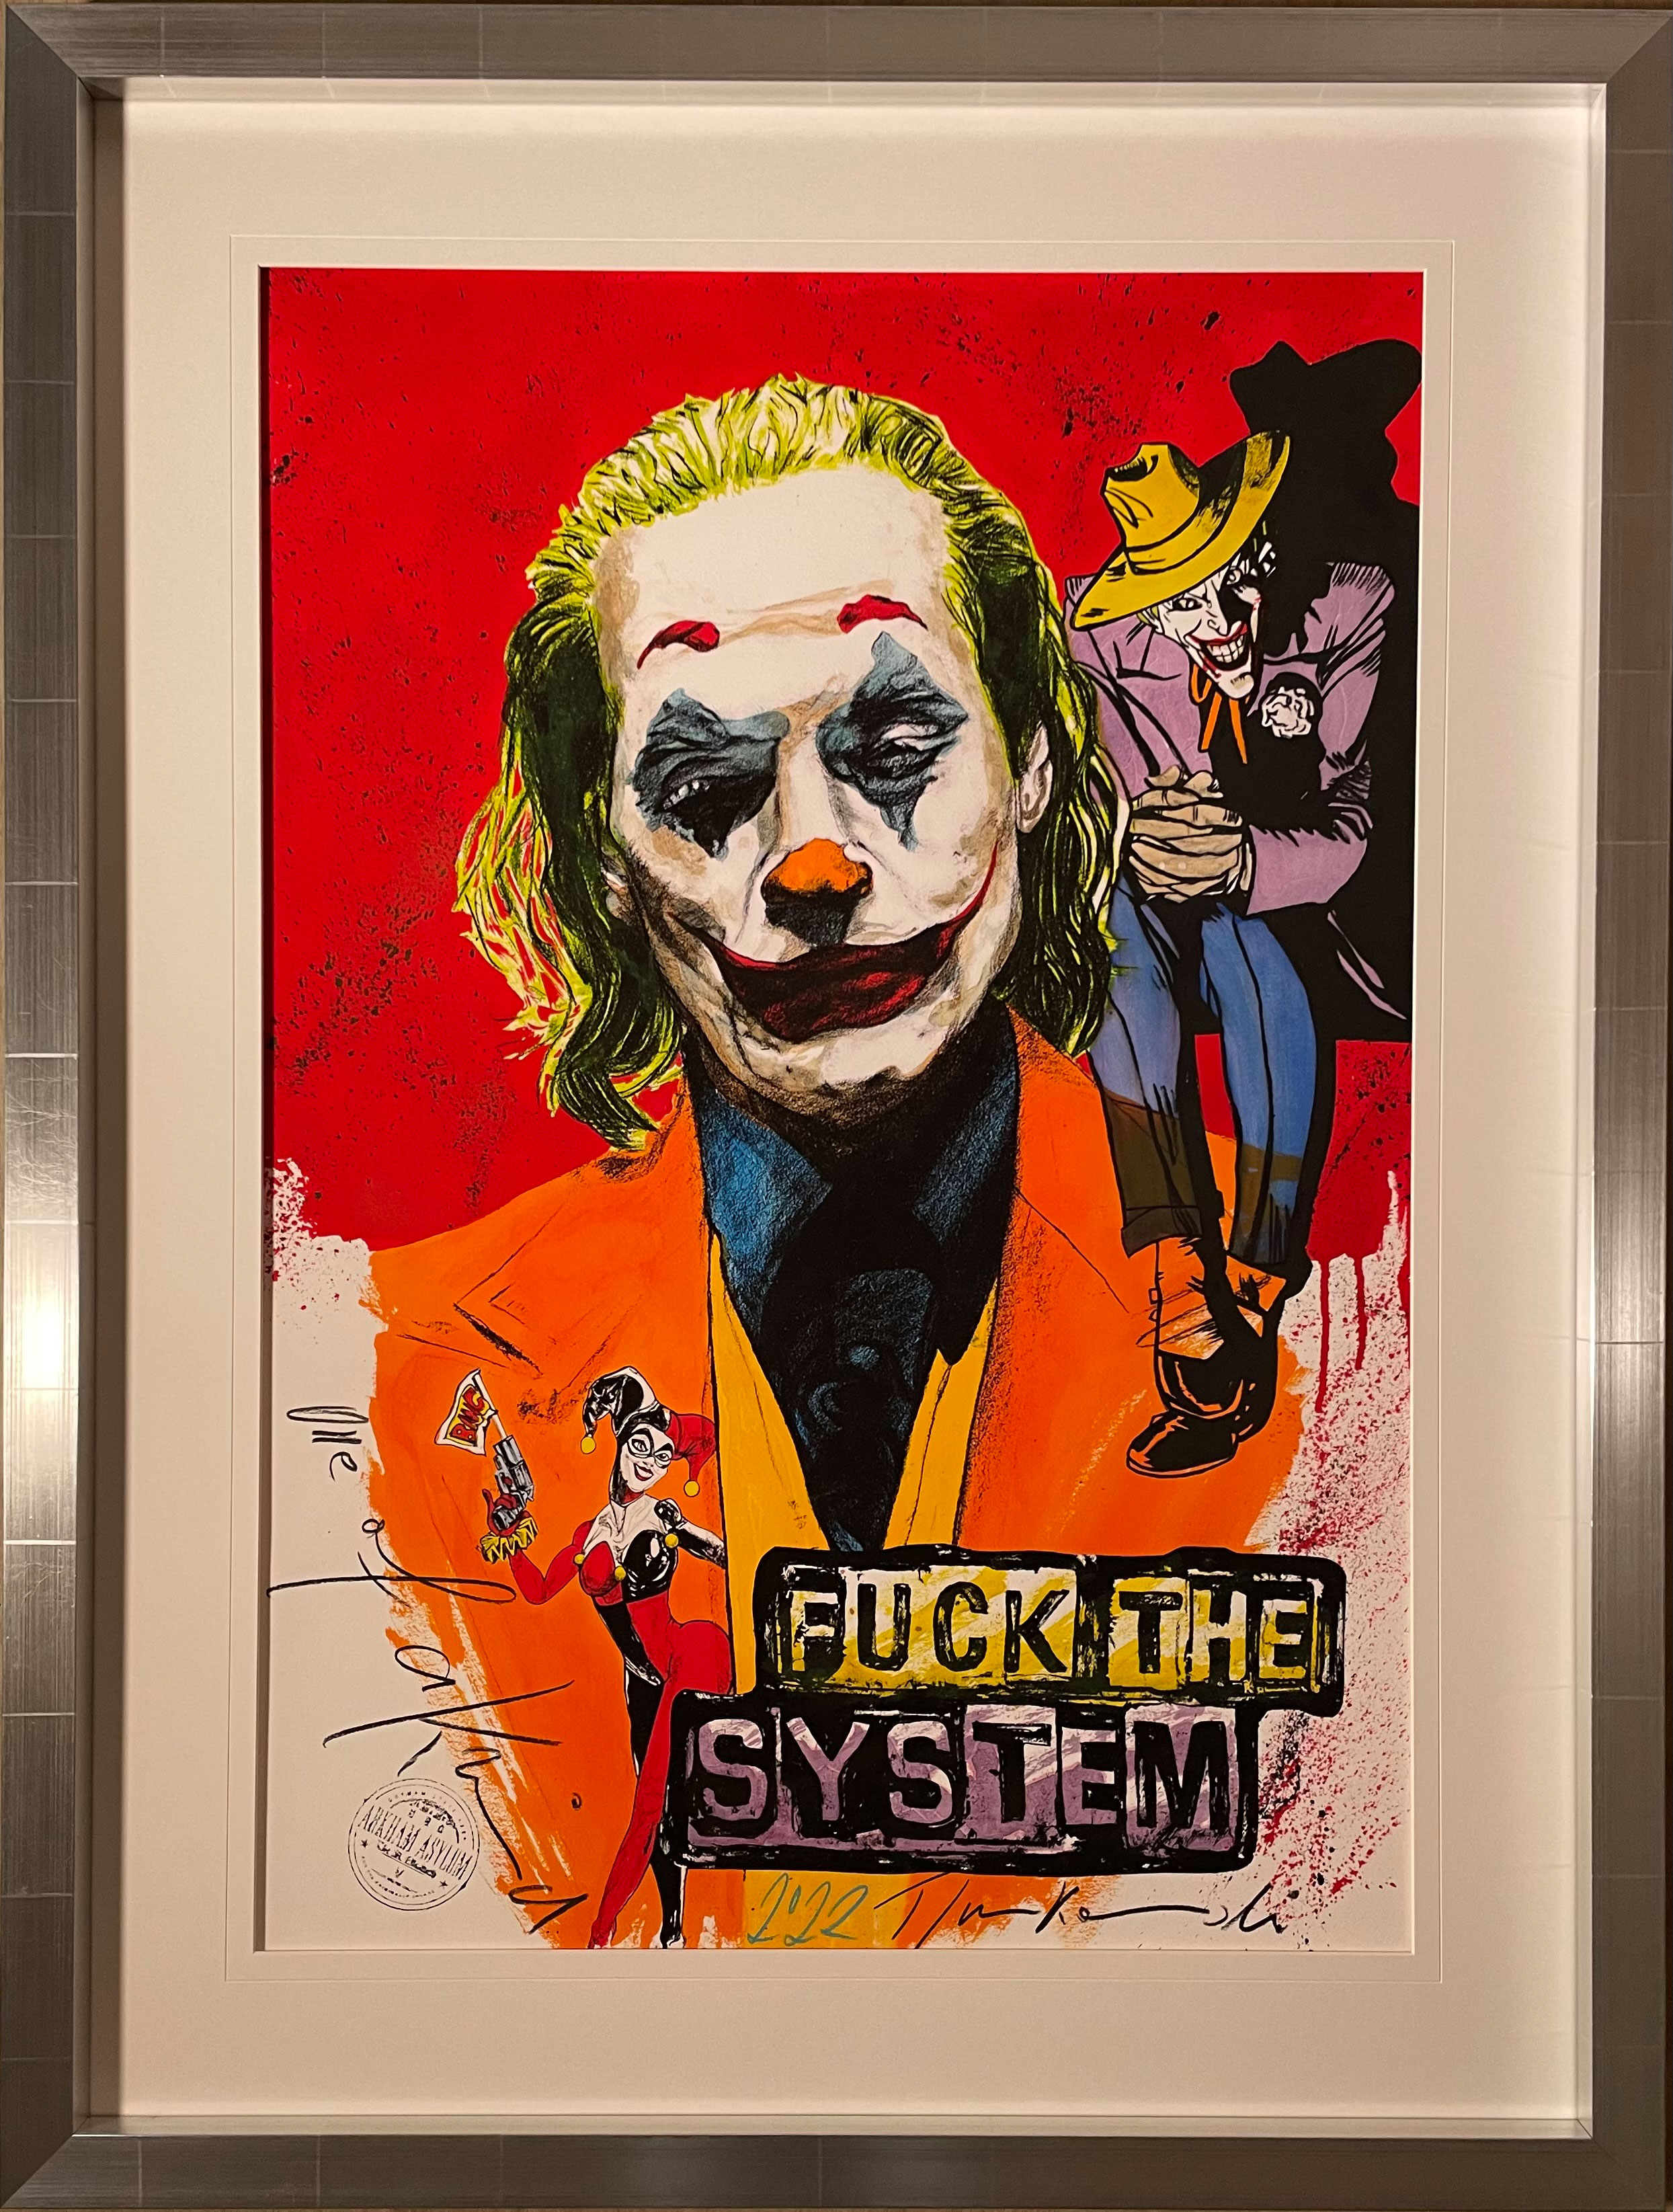 Thomas Jankowski "Joker - Fuck the System"